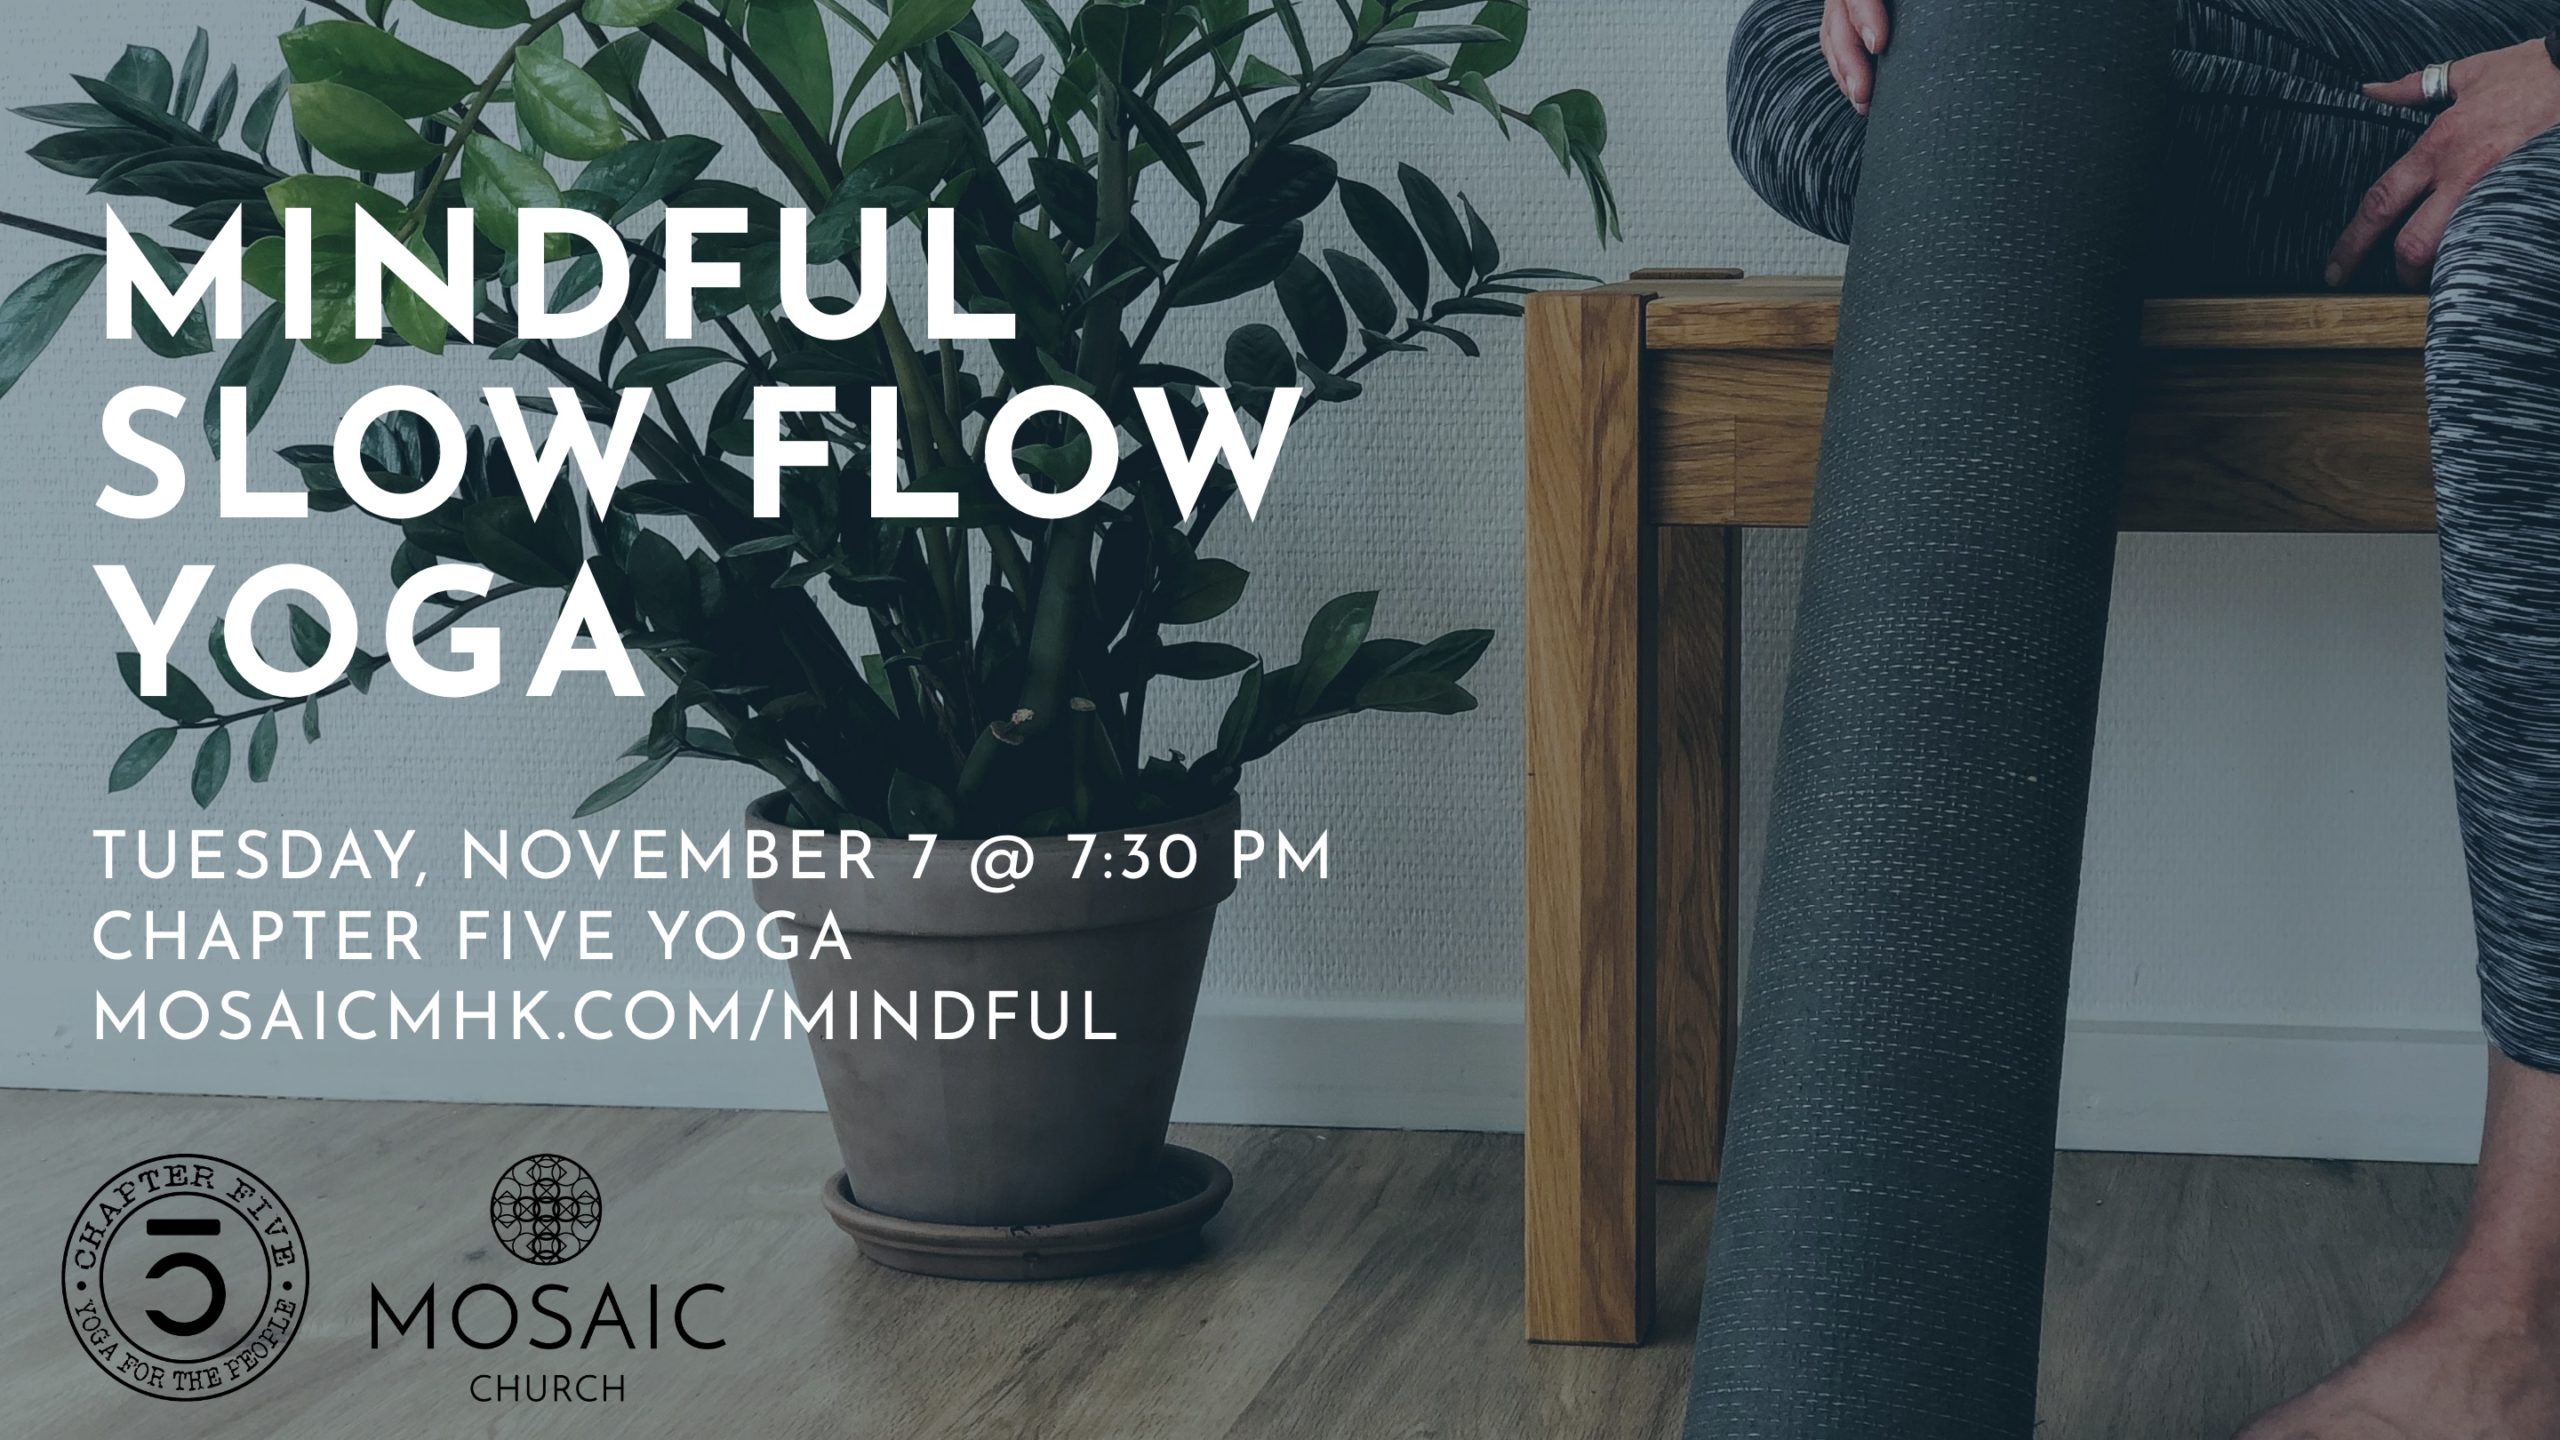 Mindful Slow Flow Yoga event